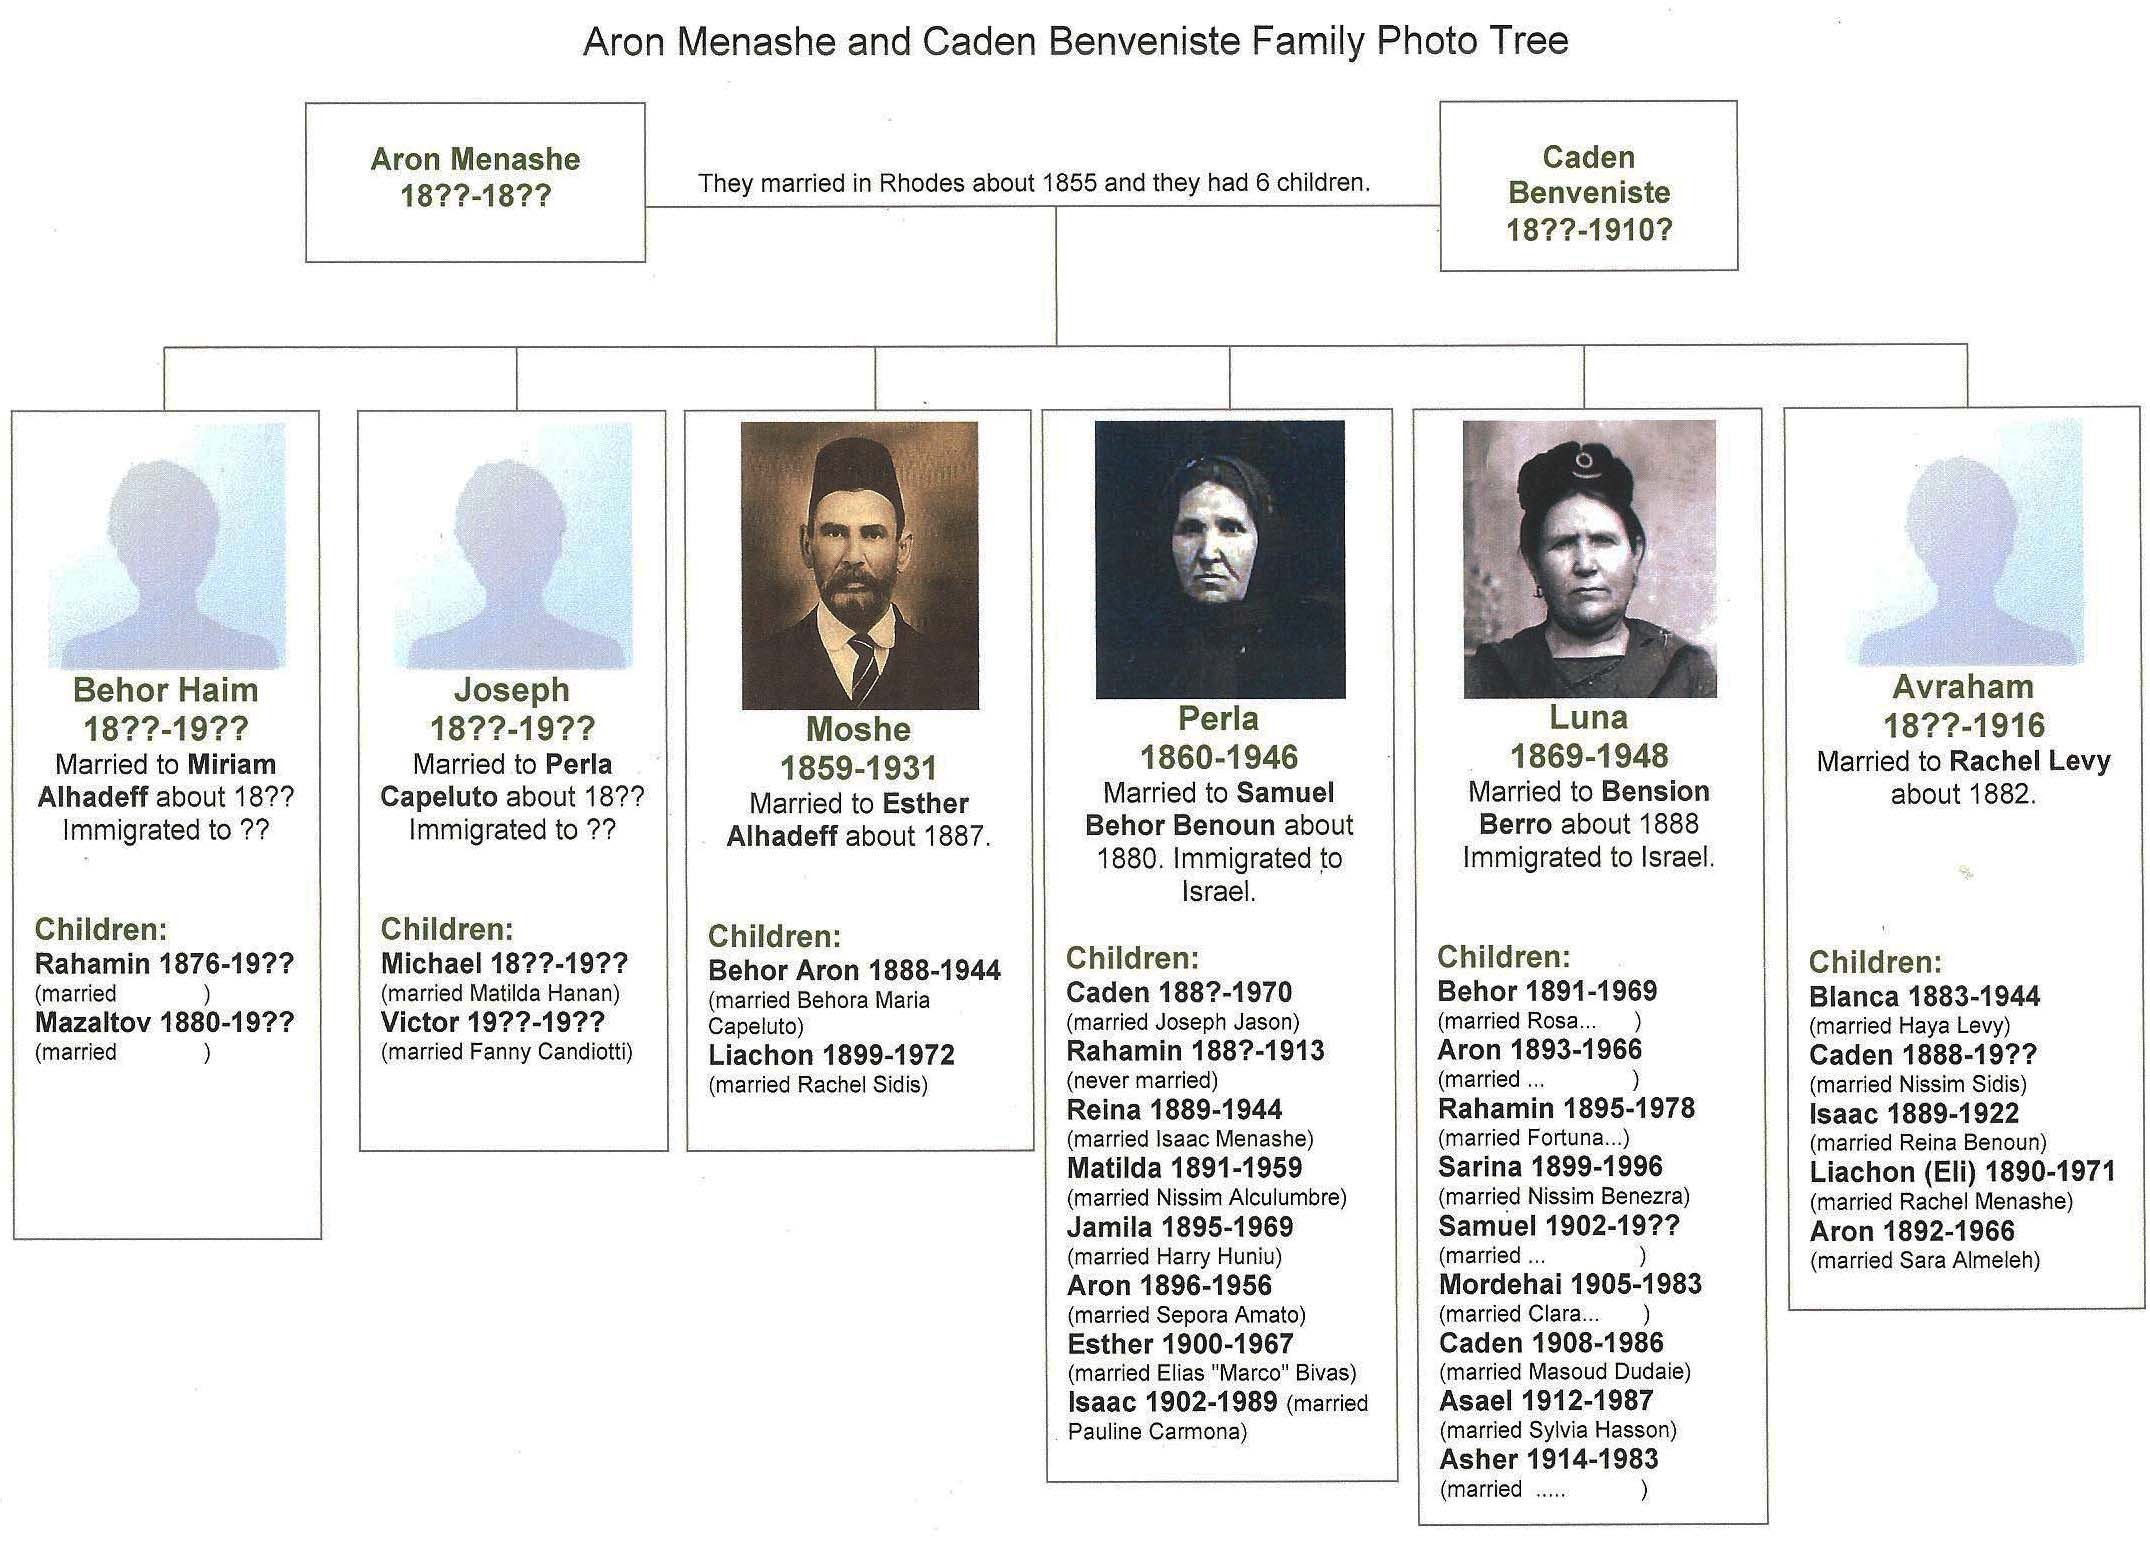 Family Trees, Family Stories & Family Photos:2150 x 1541